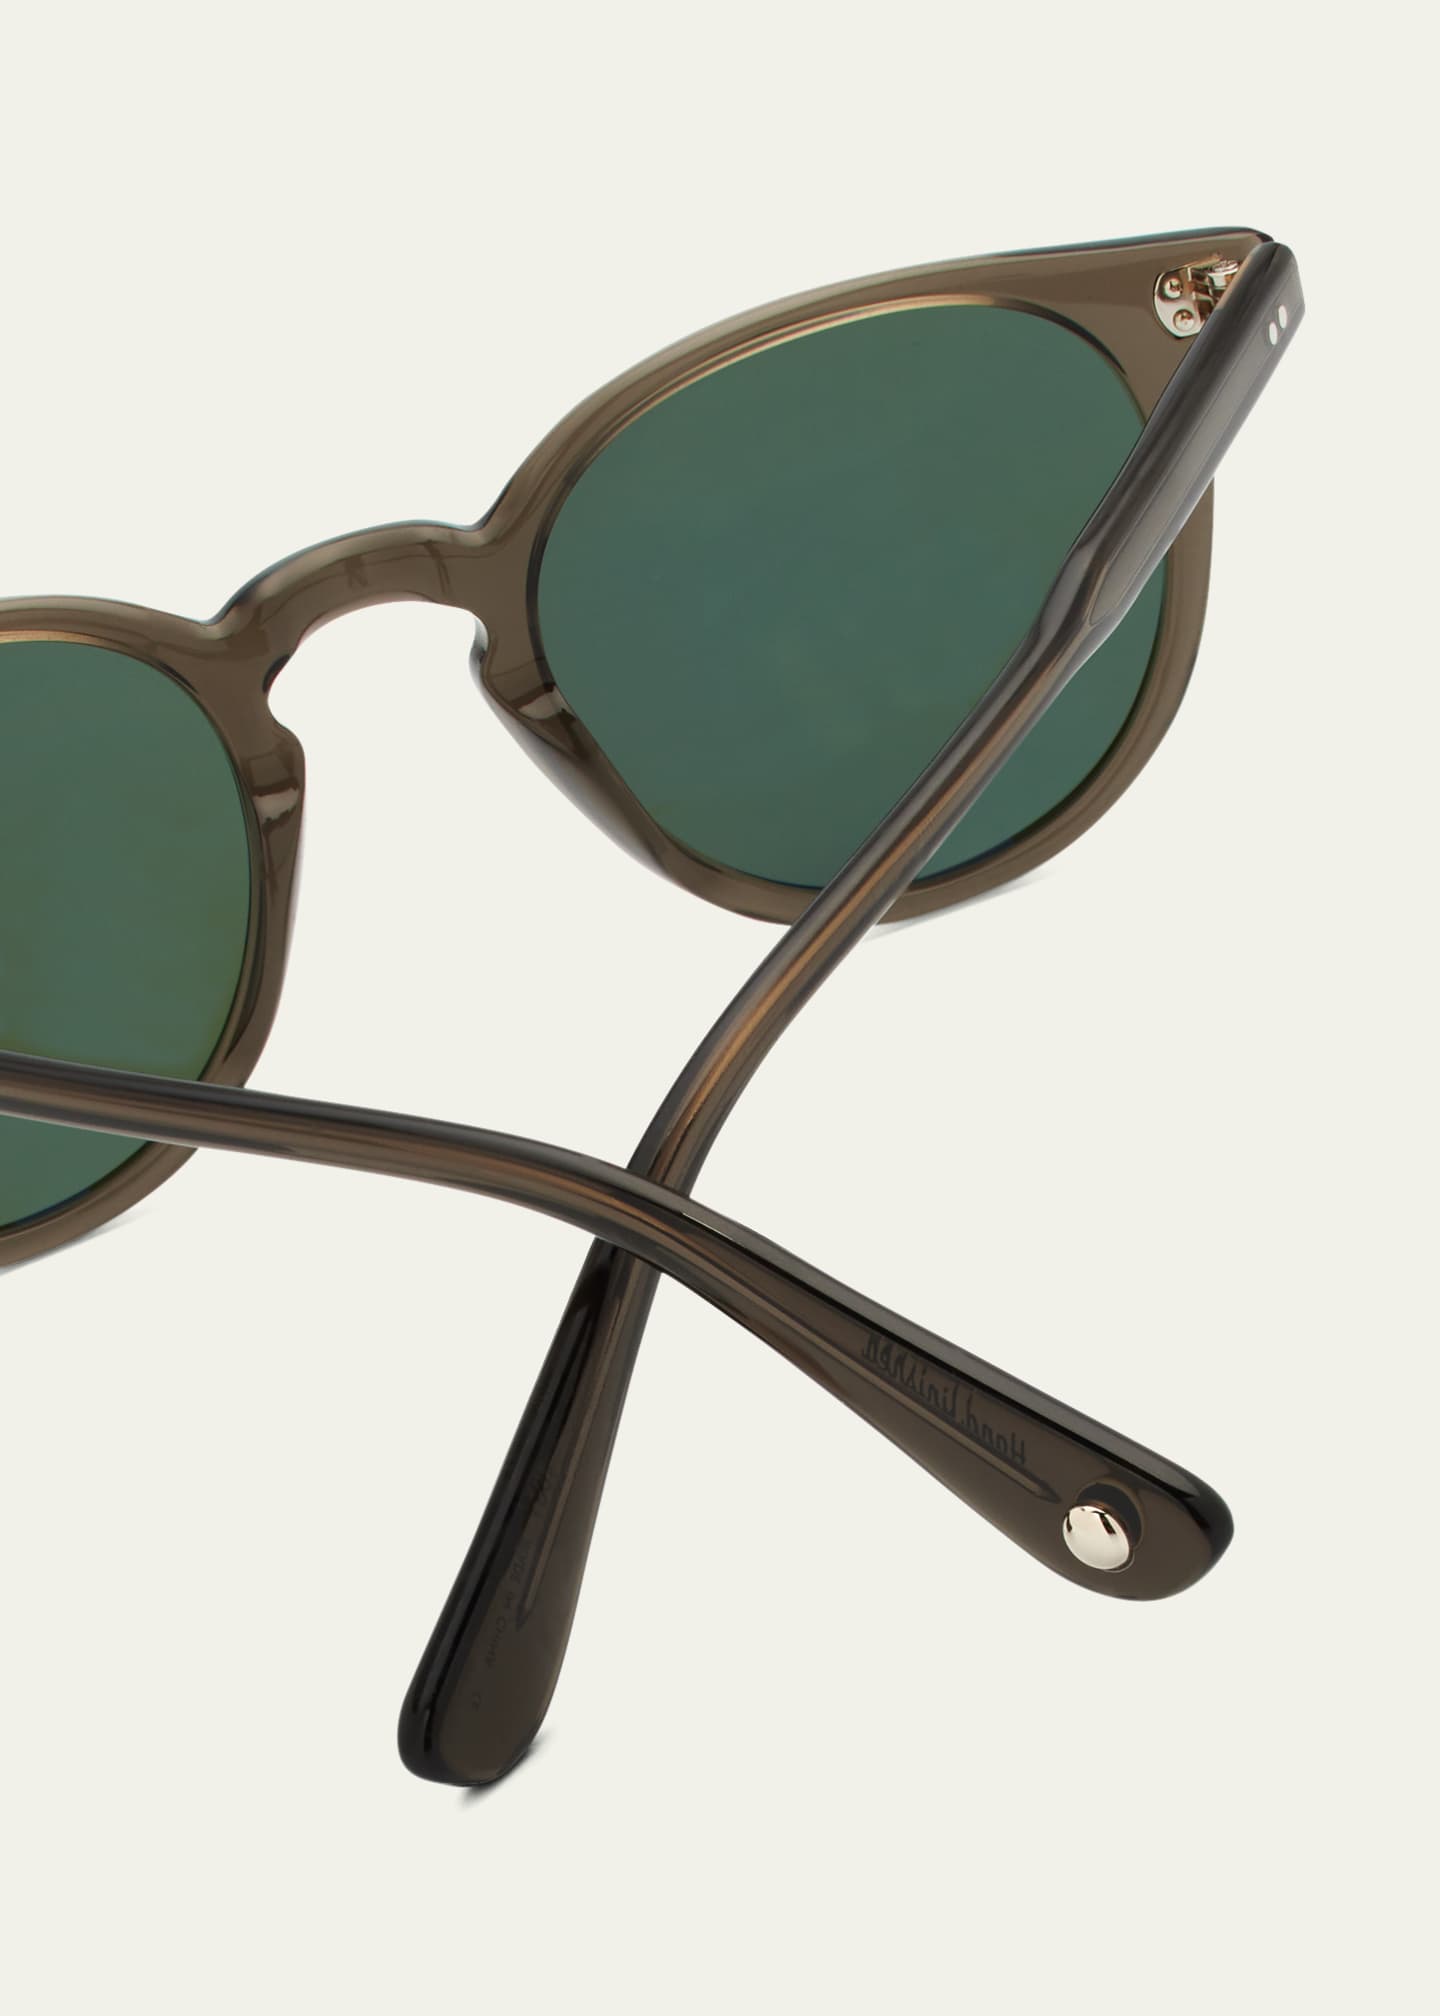 Plakater Understrege Bevidstløs Garrett Leight Men's Clement Sun Round Sunglasses - Bergdorf Goodman